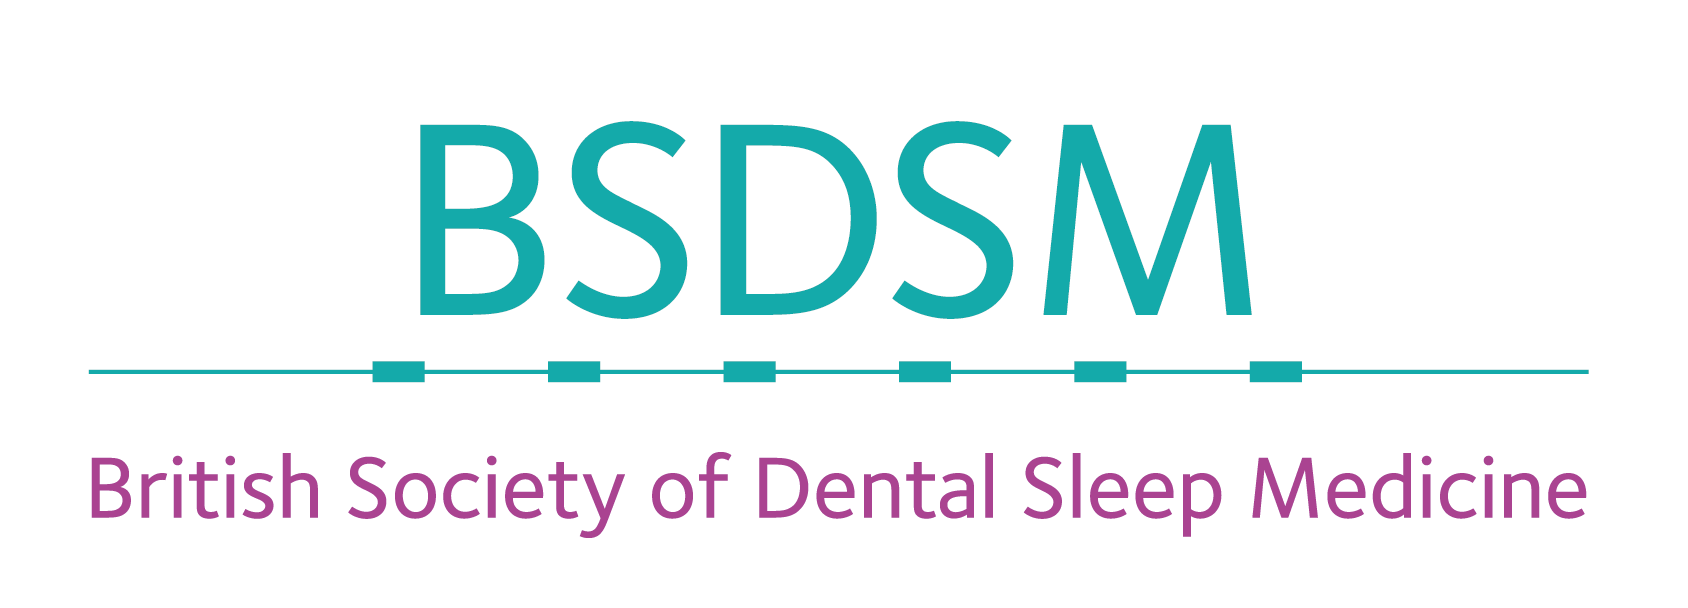 British Society of Dental Sleep Medicine